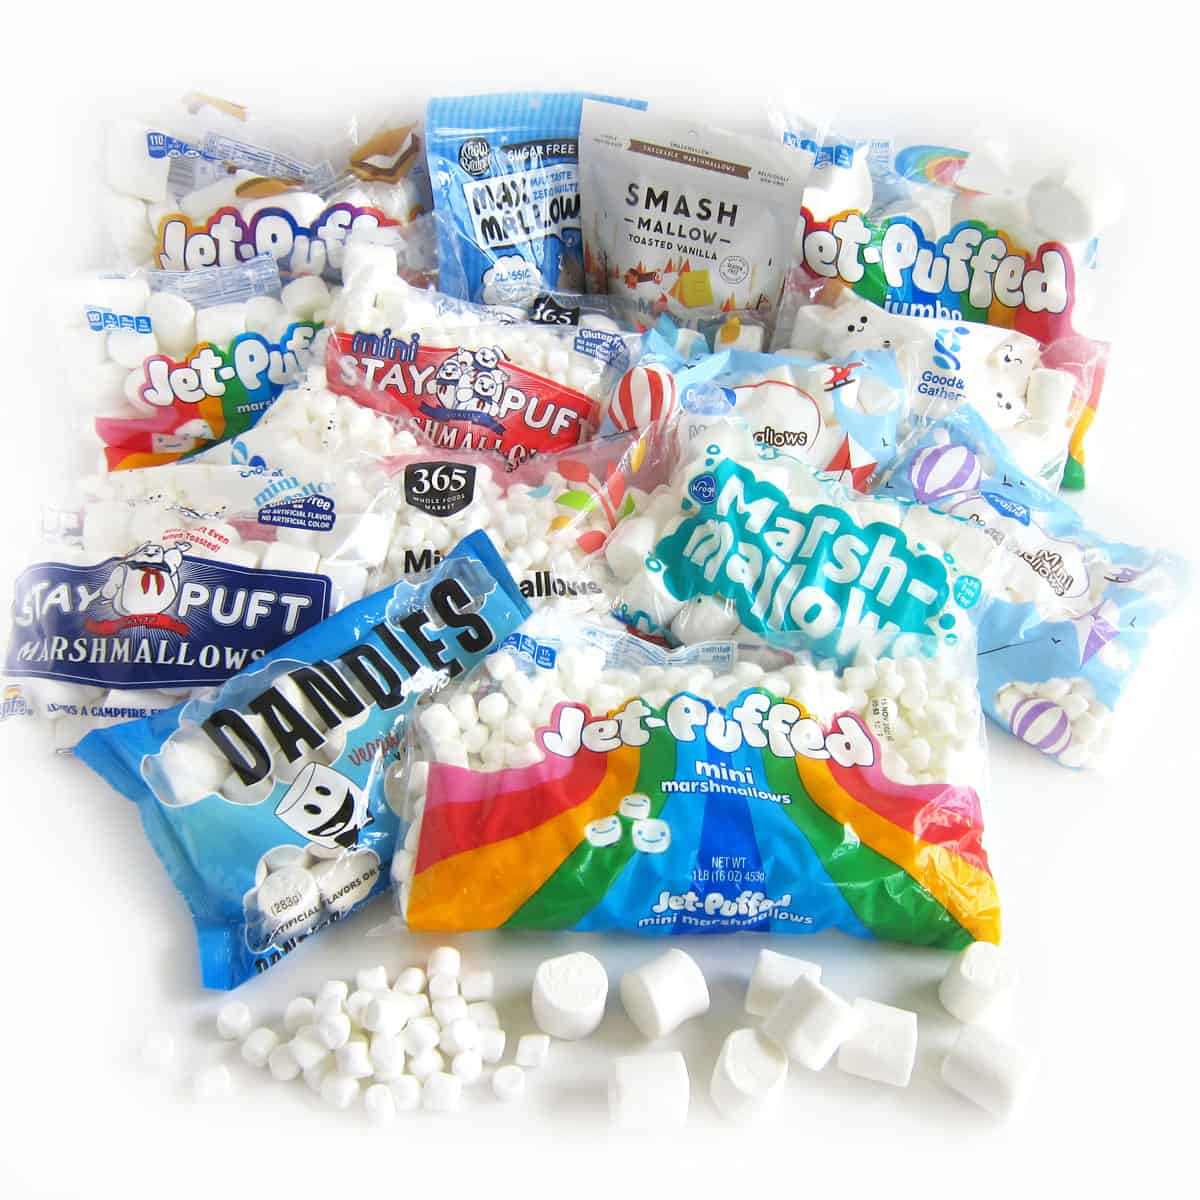 Bags of marshmallows including Kraft Jet-Puffed, Campfire Stay Puft, Dandies Vegan, Kroger, Target, and Walmart marshmallows.